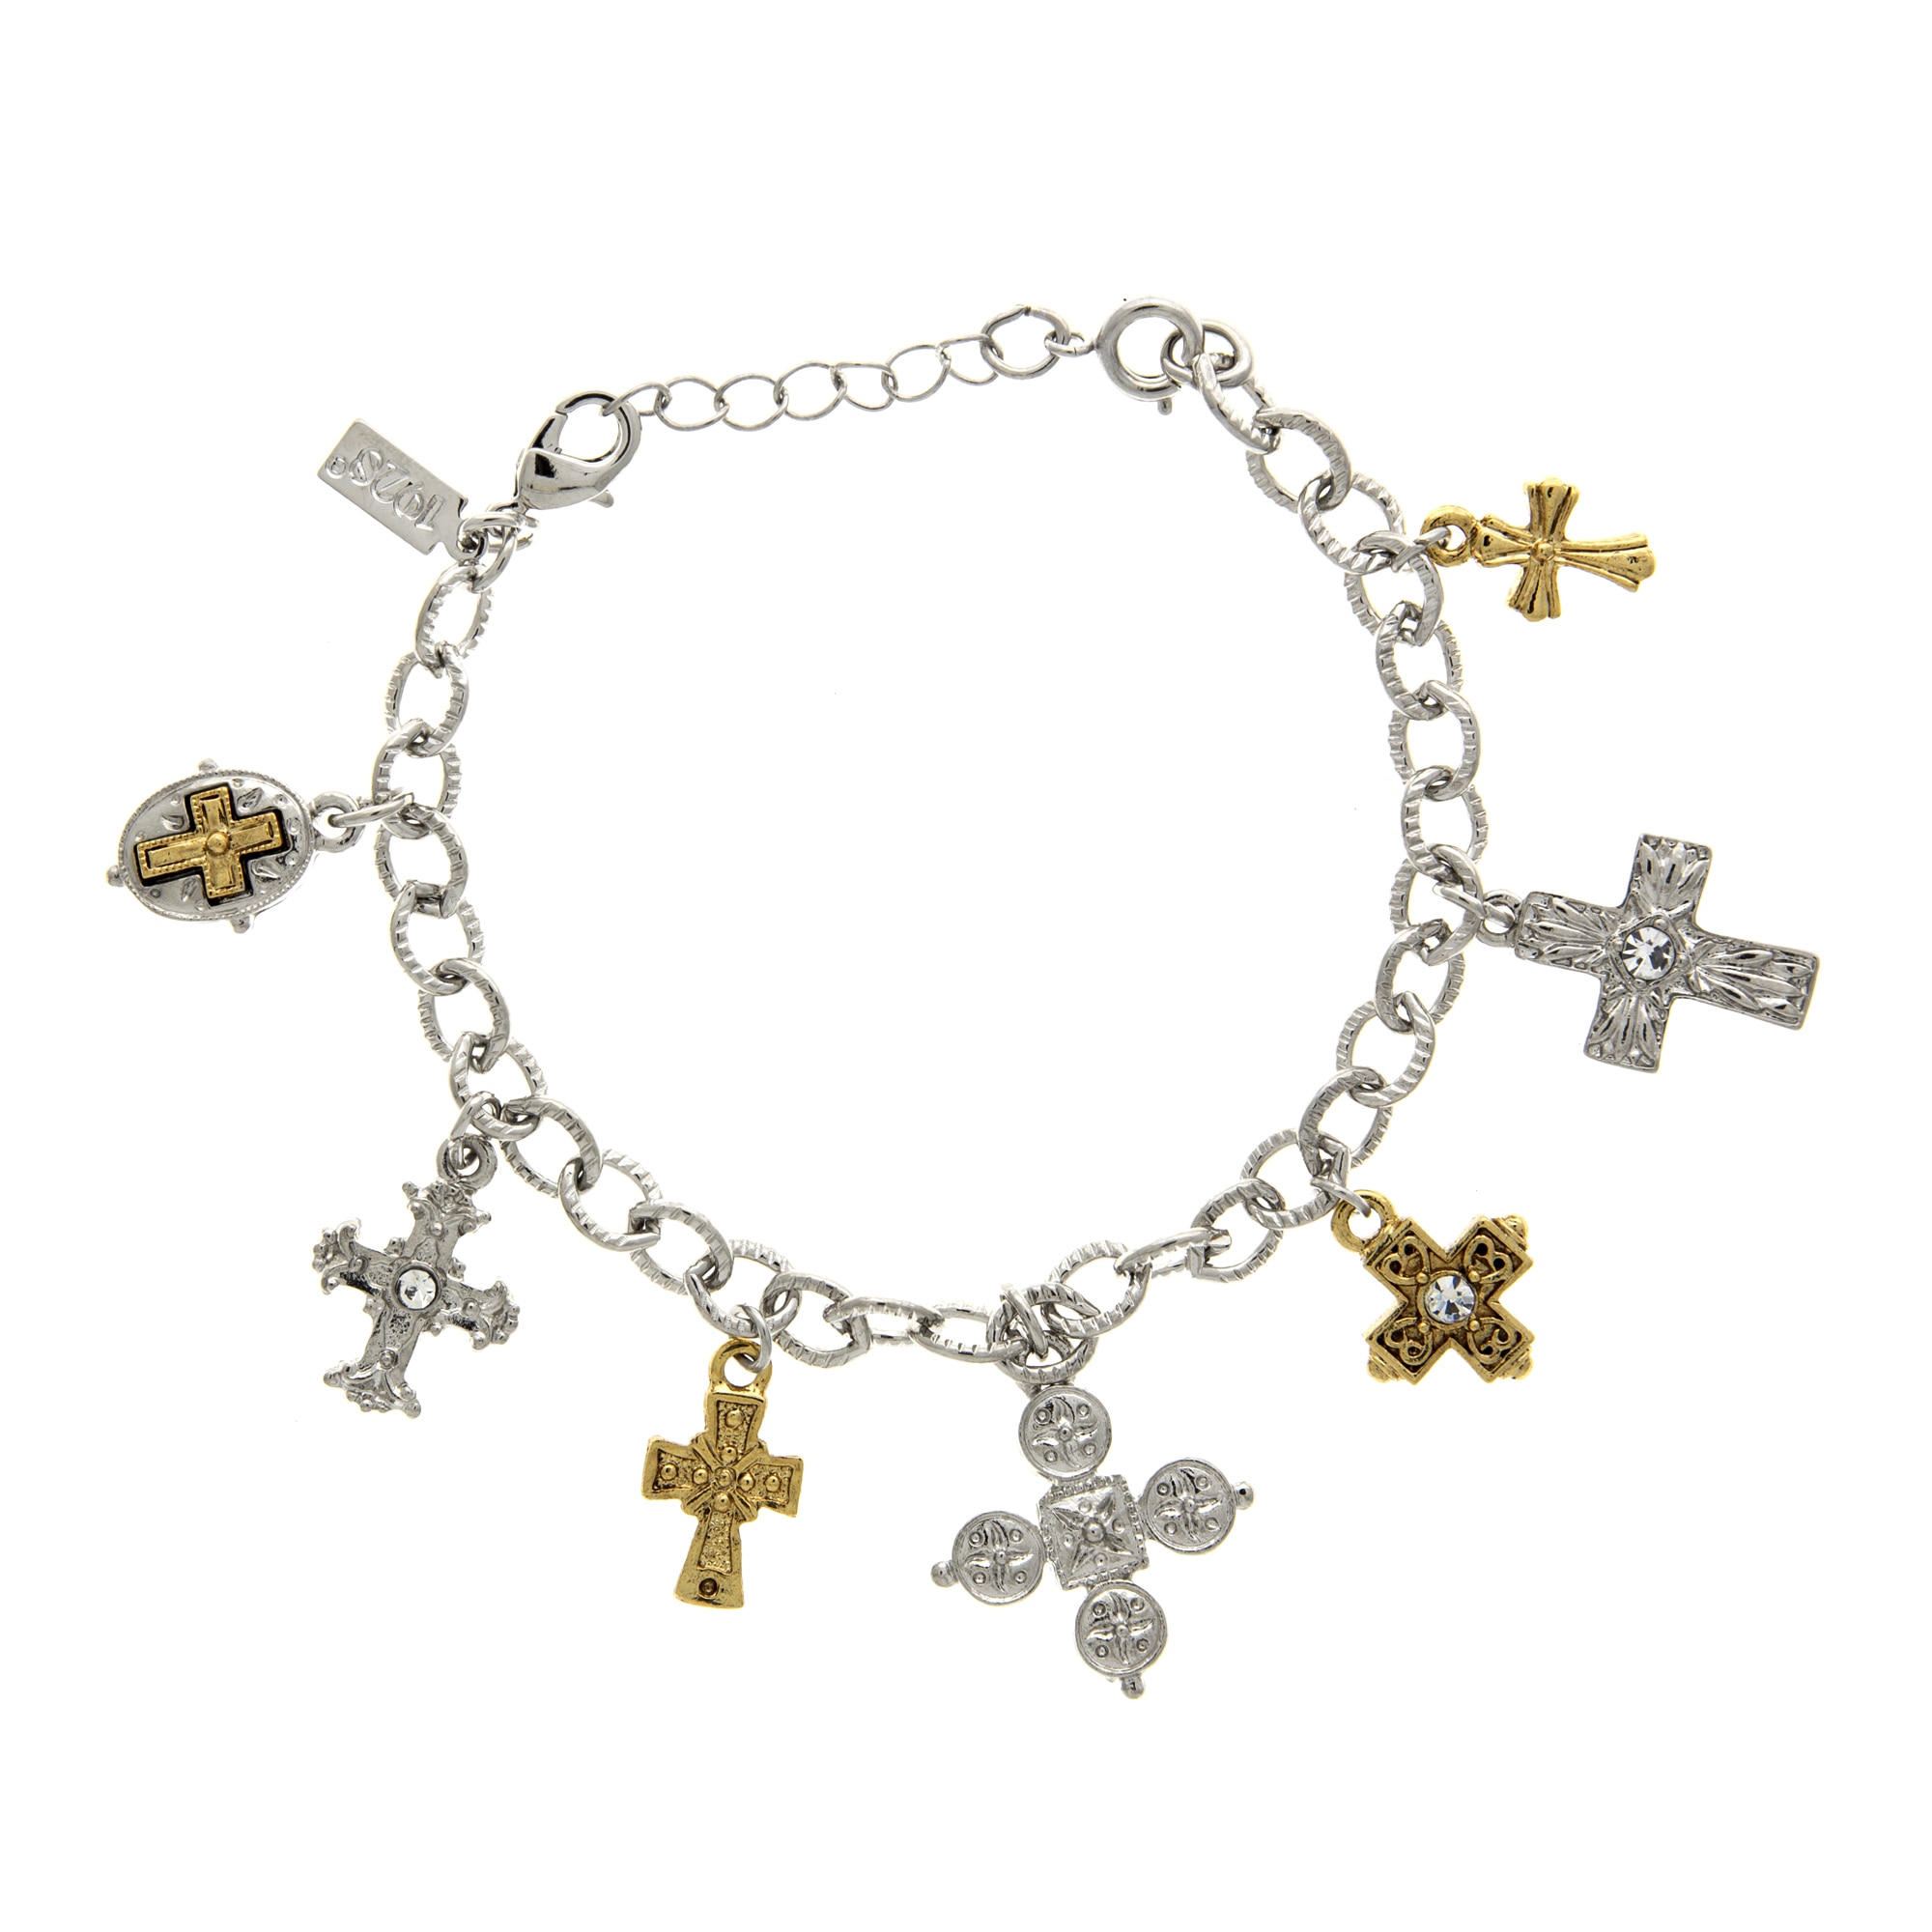 1928 Symbols of Faith two tone seven cross charm bracelet